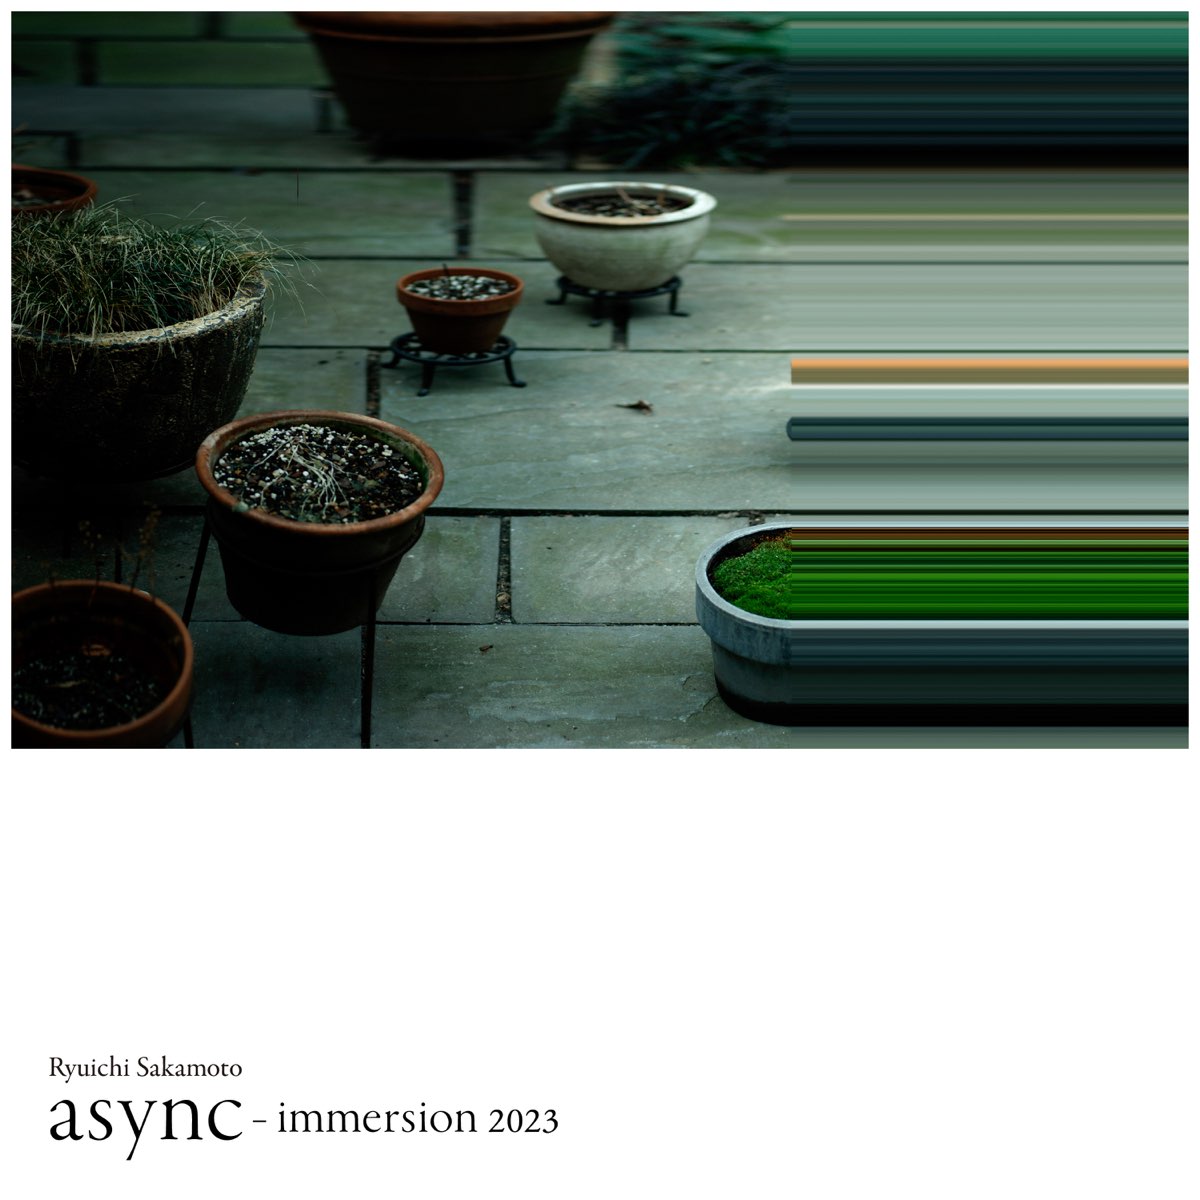 async - immersion 2023 - Album by Ryuichi Sakamoto - Apple Music